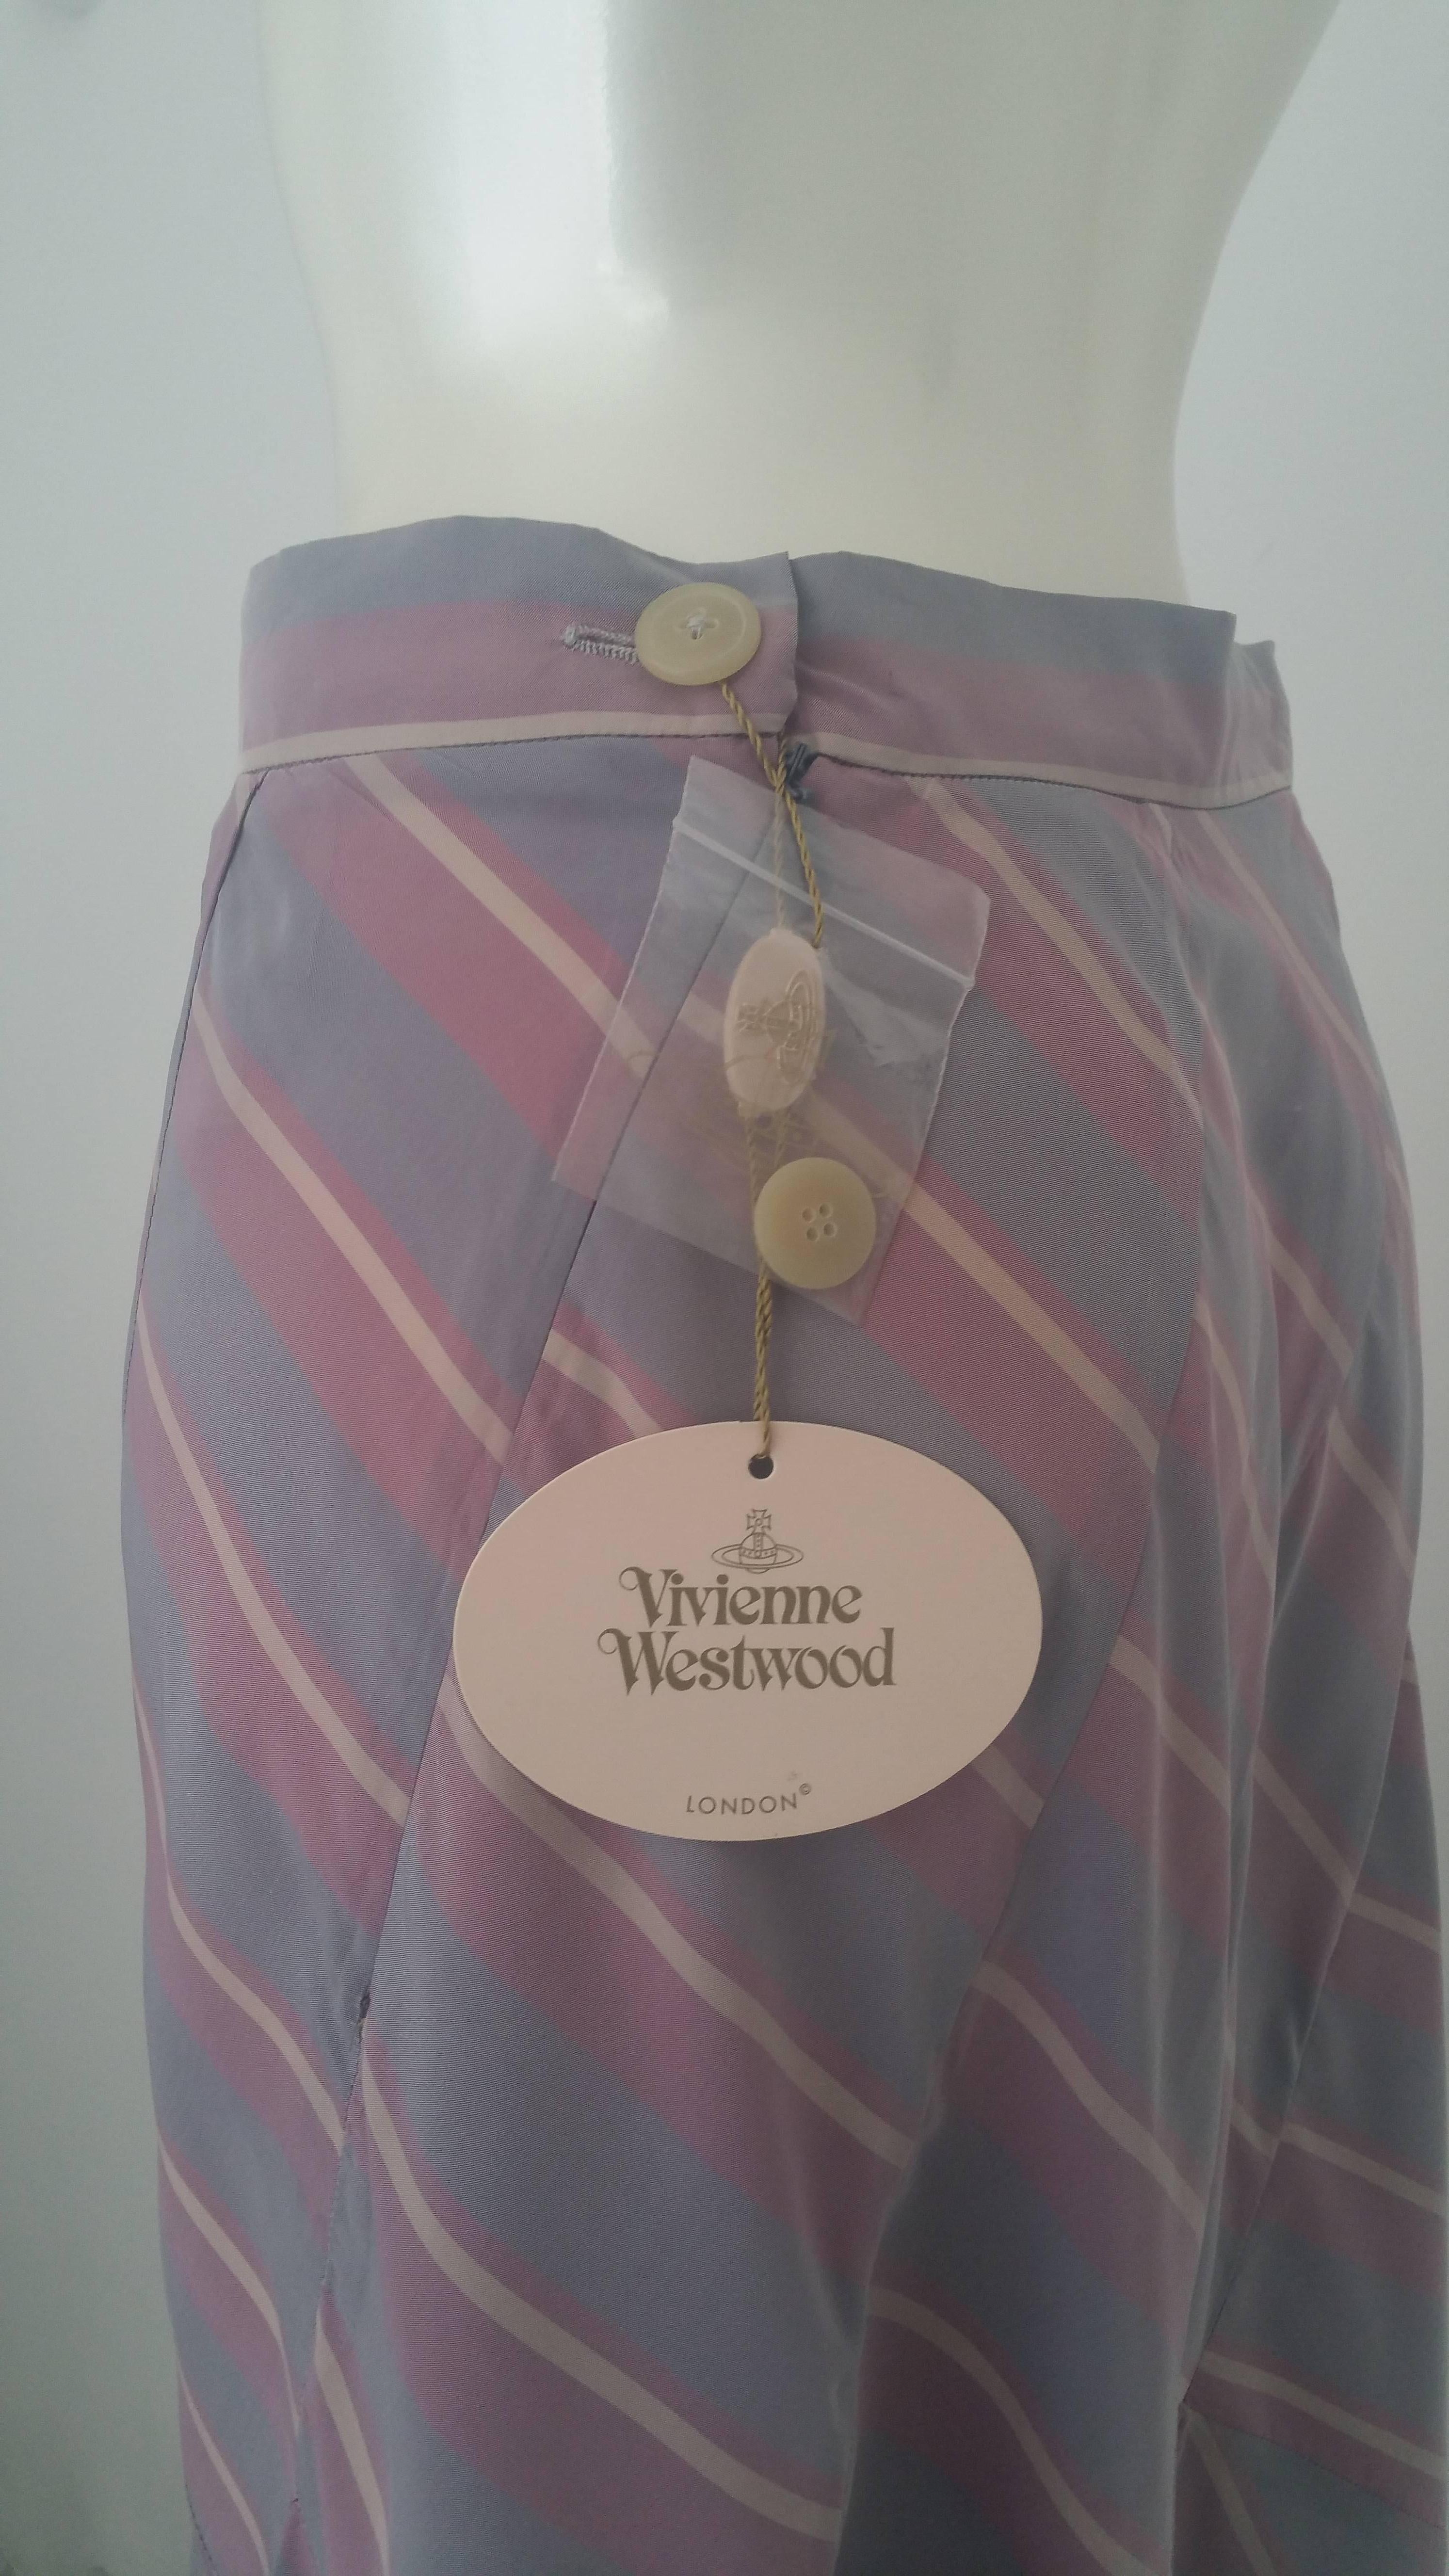 Women's 1990s Vivienne Westwood main label iconic skirt 